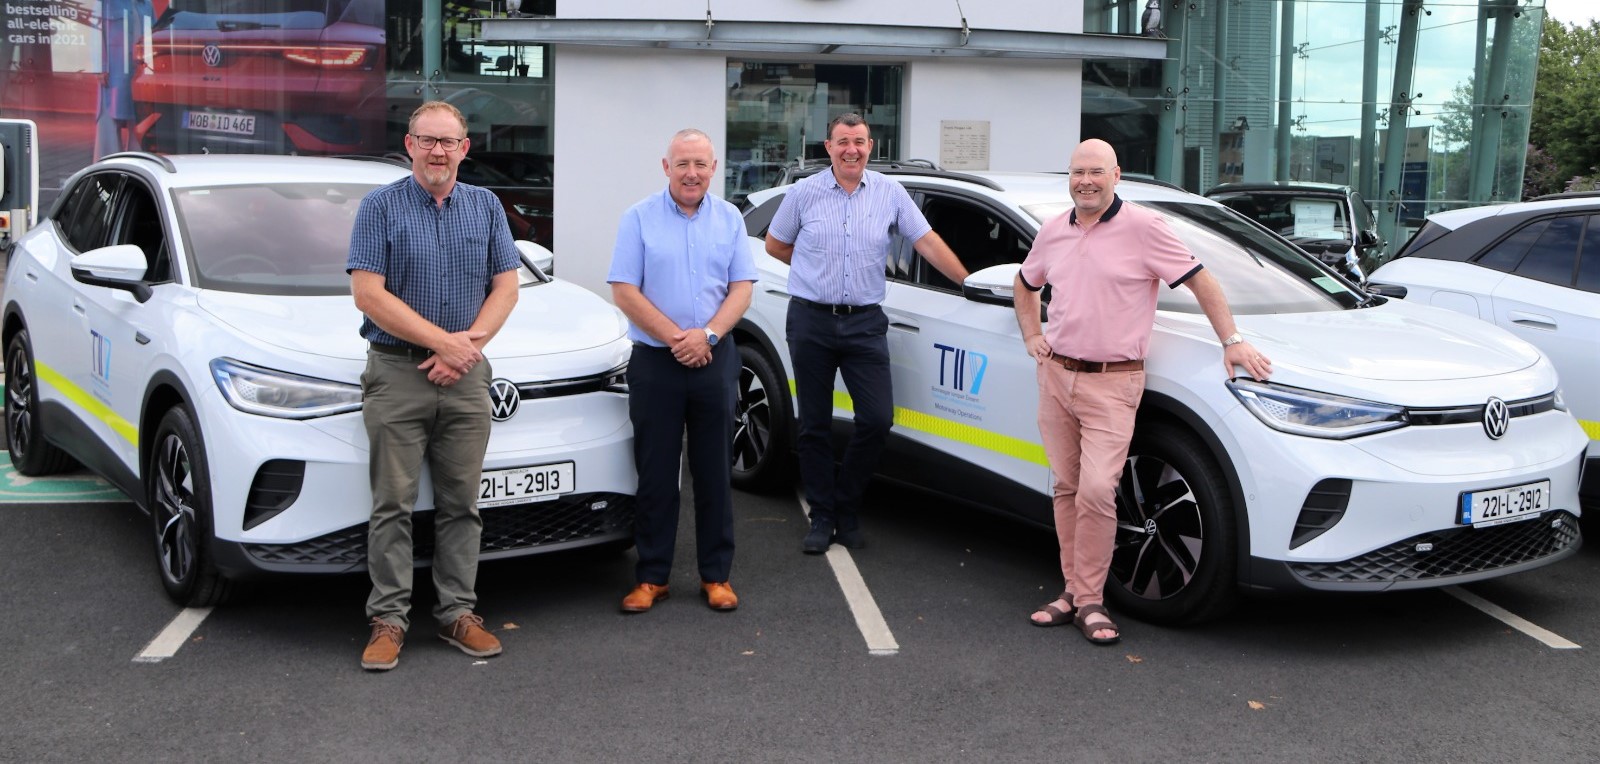 TII staff with EV Fleet of Volkswagen ID 4 Electric Vehicles